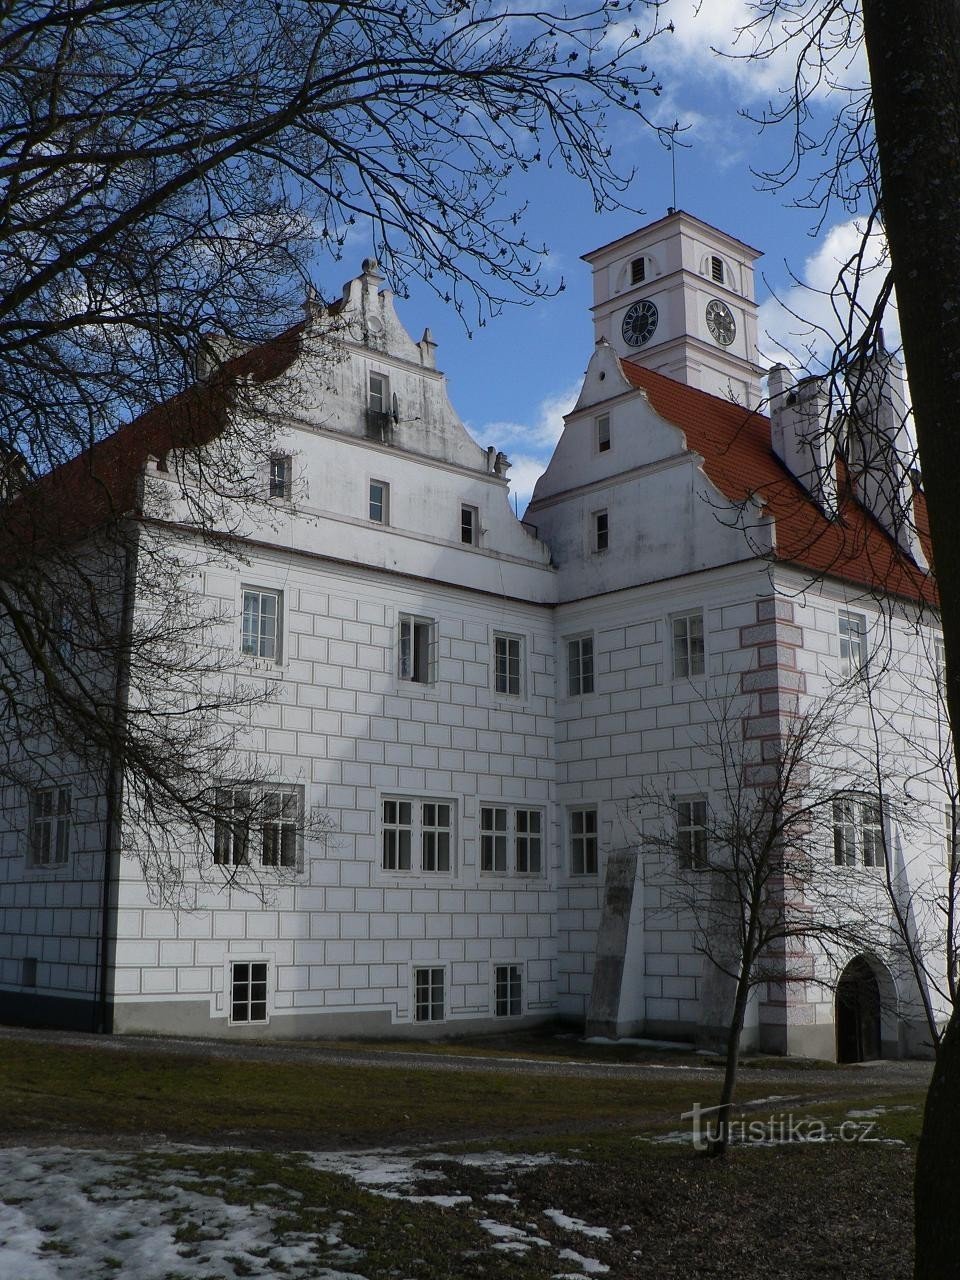 Castelo de Žichovice, parte ocidental